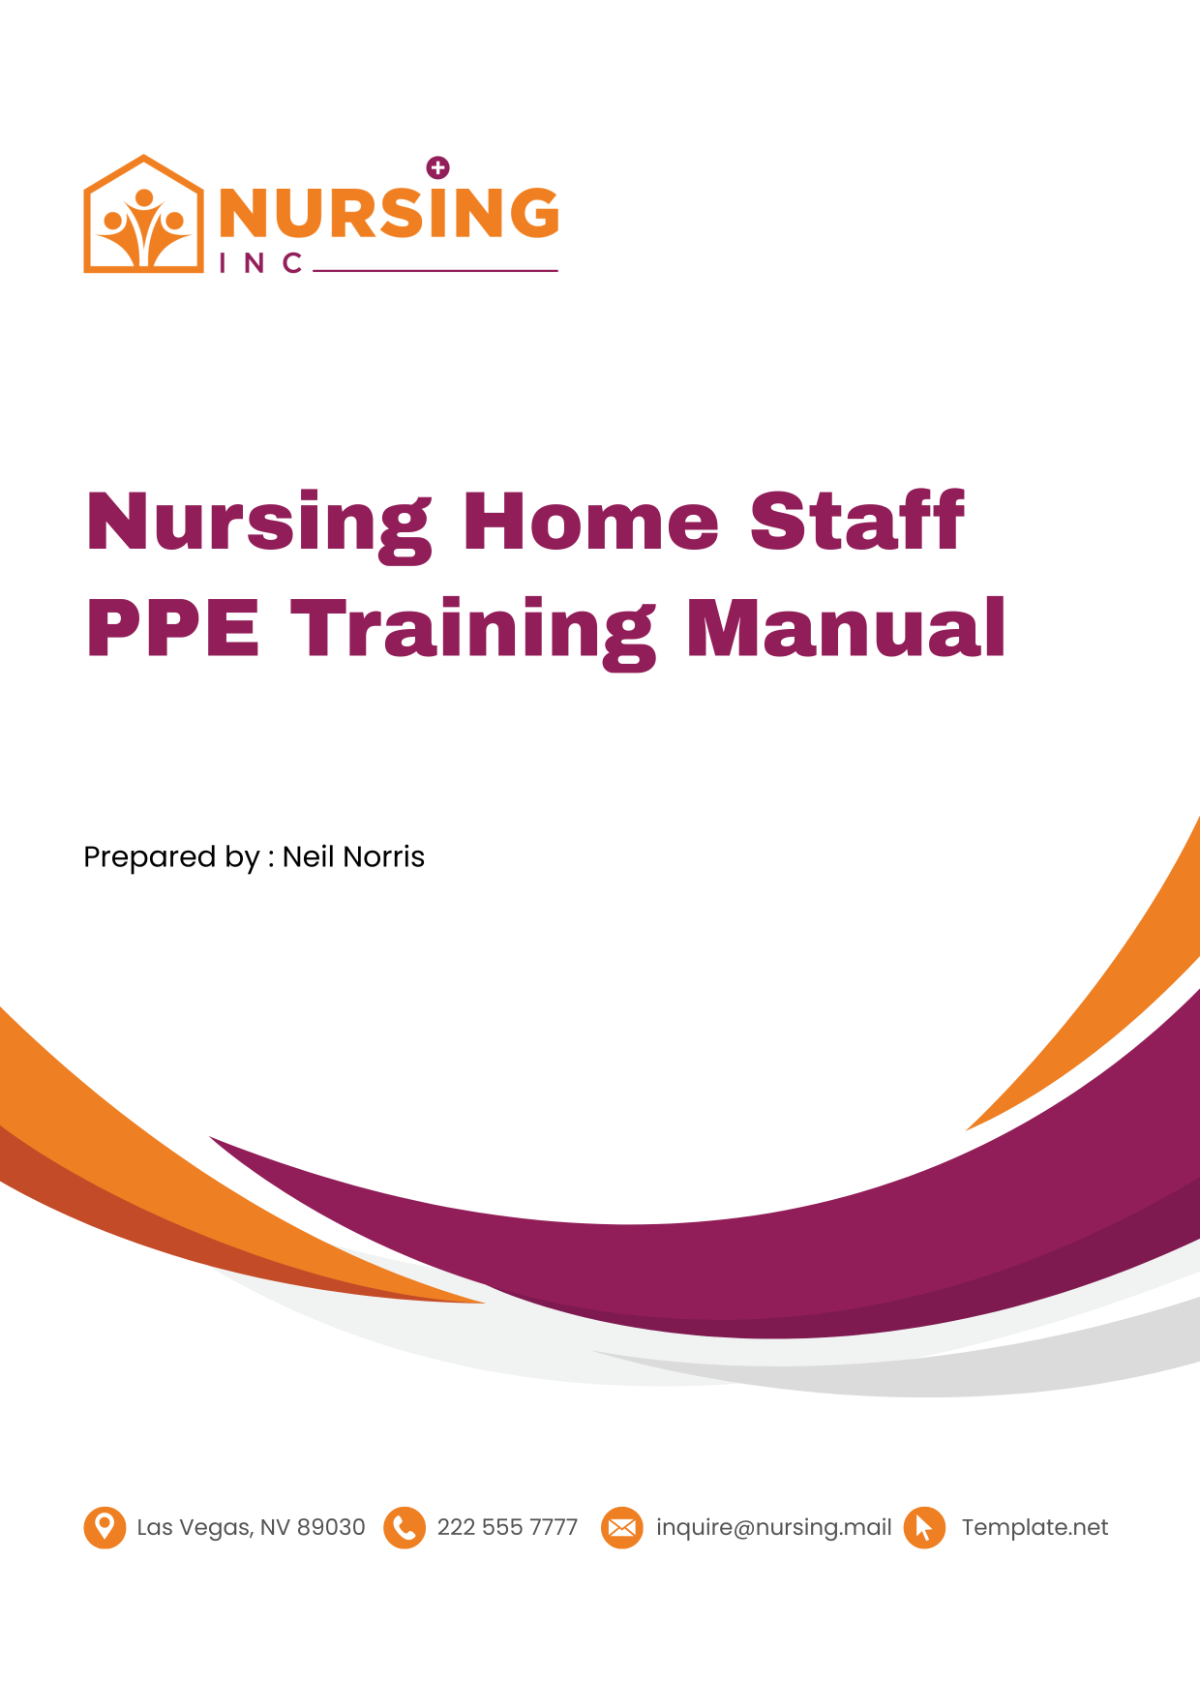 Nursing Home Staff PPE Training Manual Template